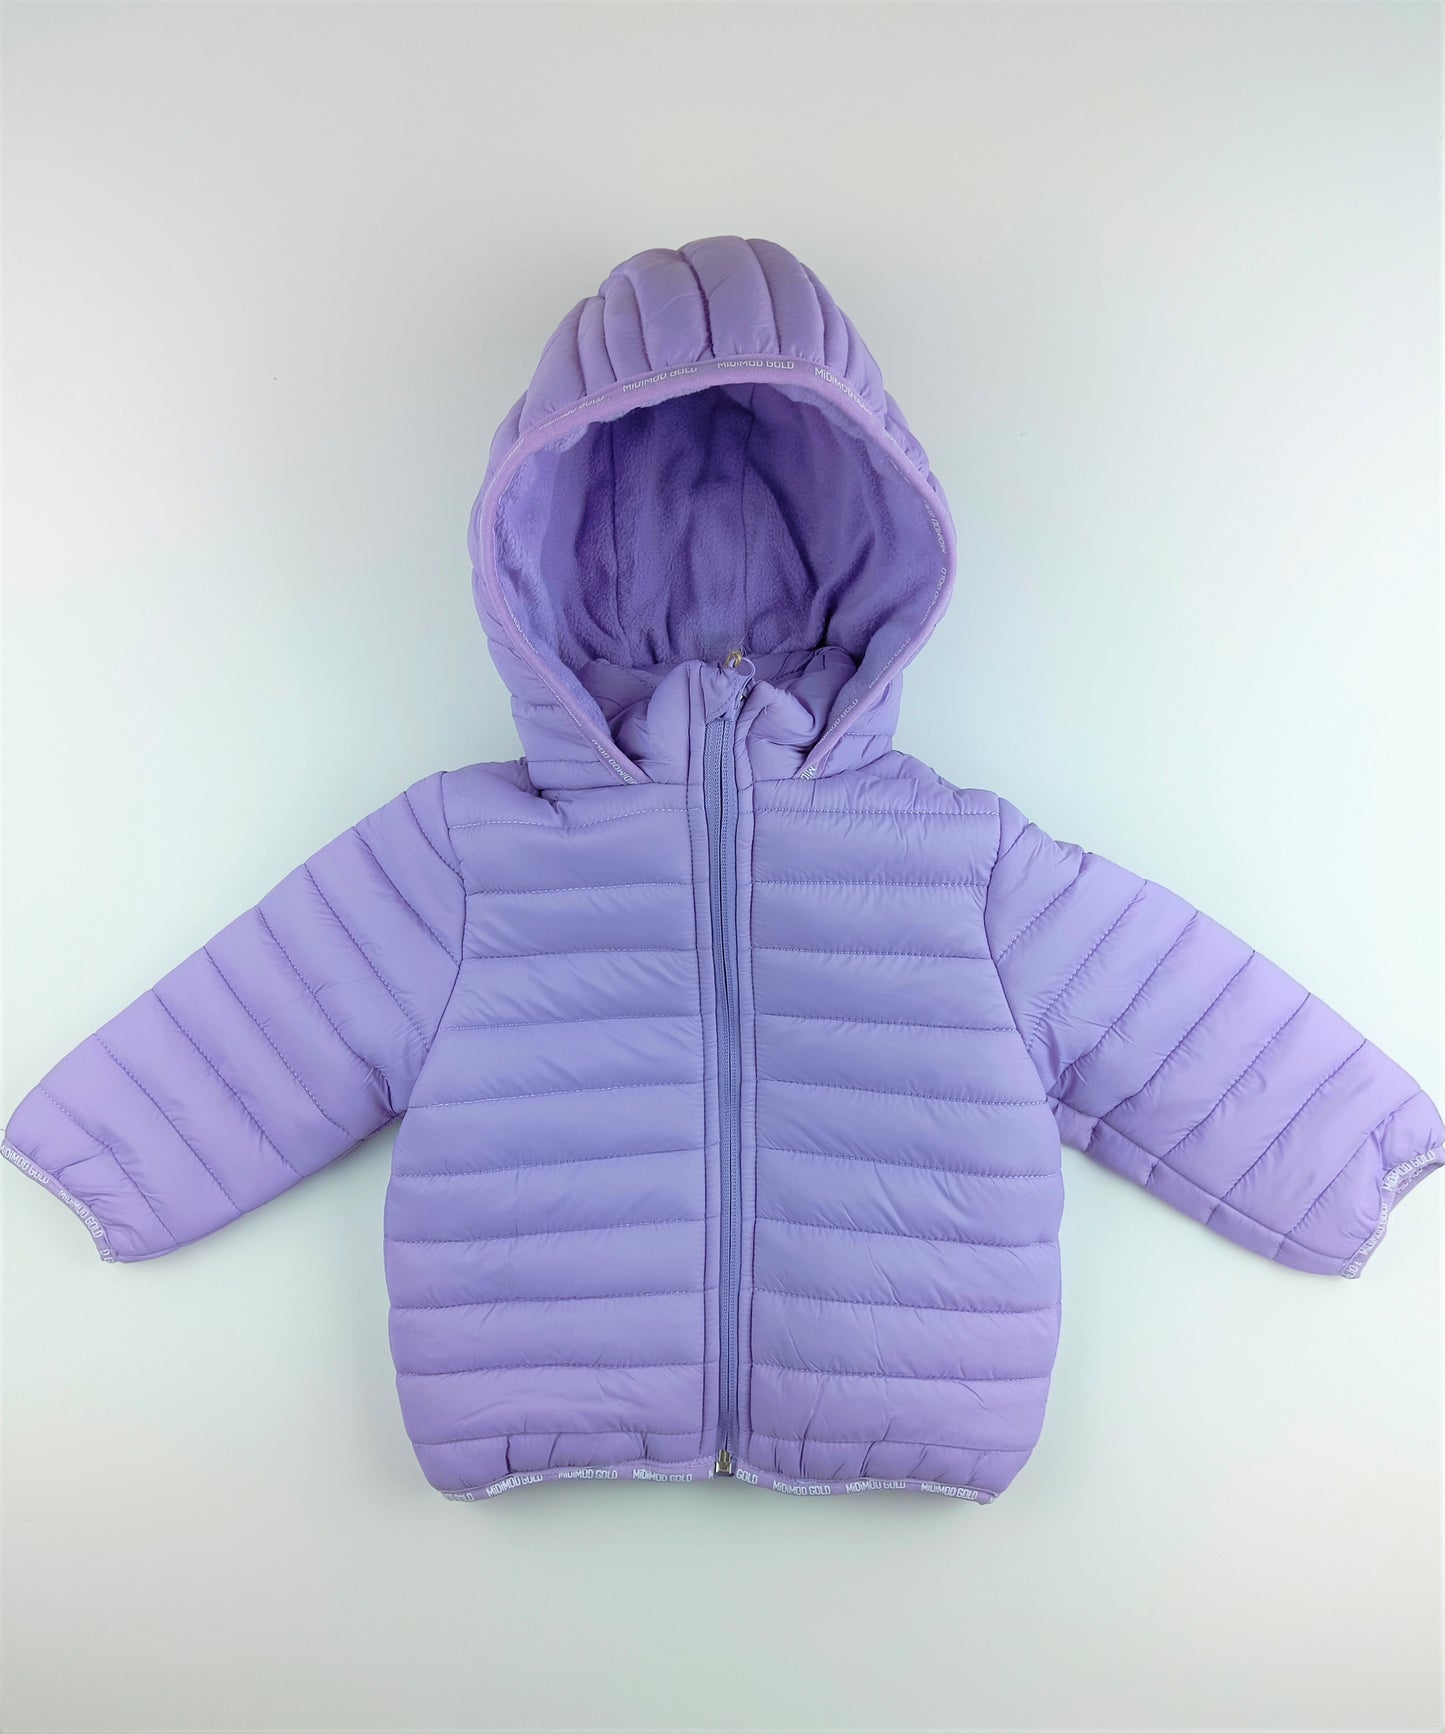 Basic fleece lined puffer jacket